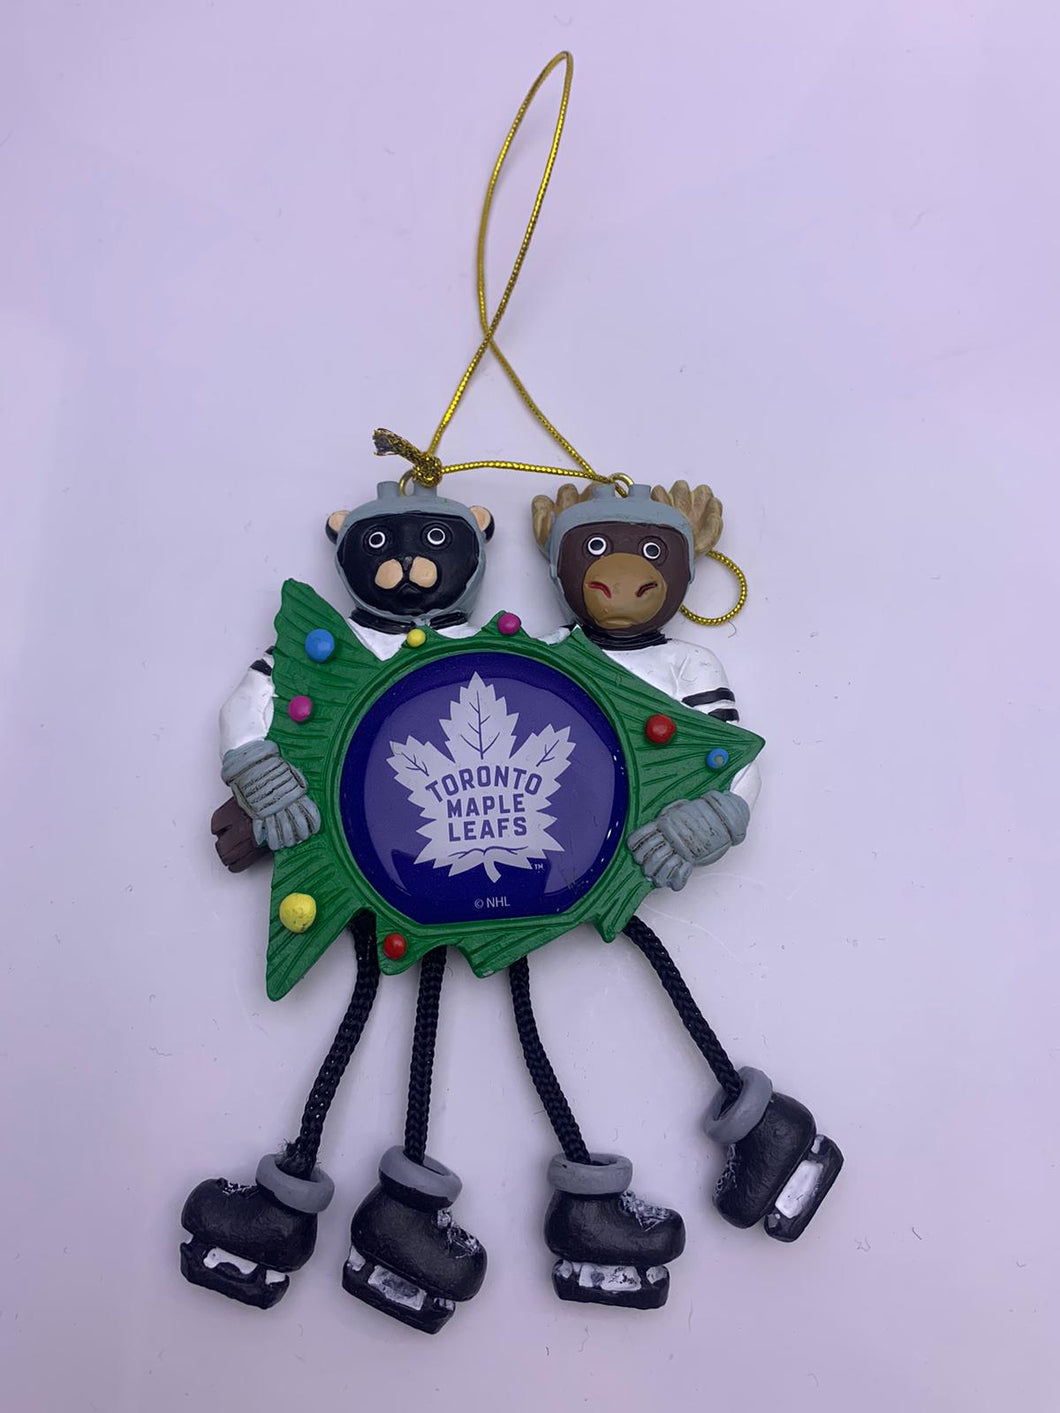 Toronto Maple Leafs Ornament